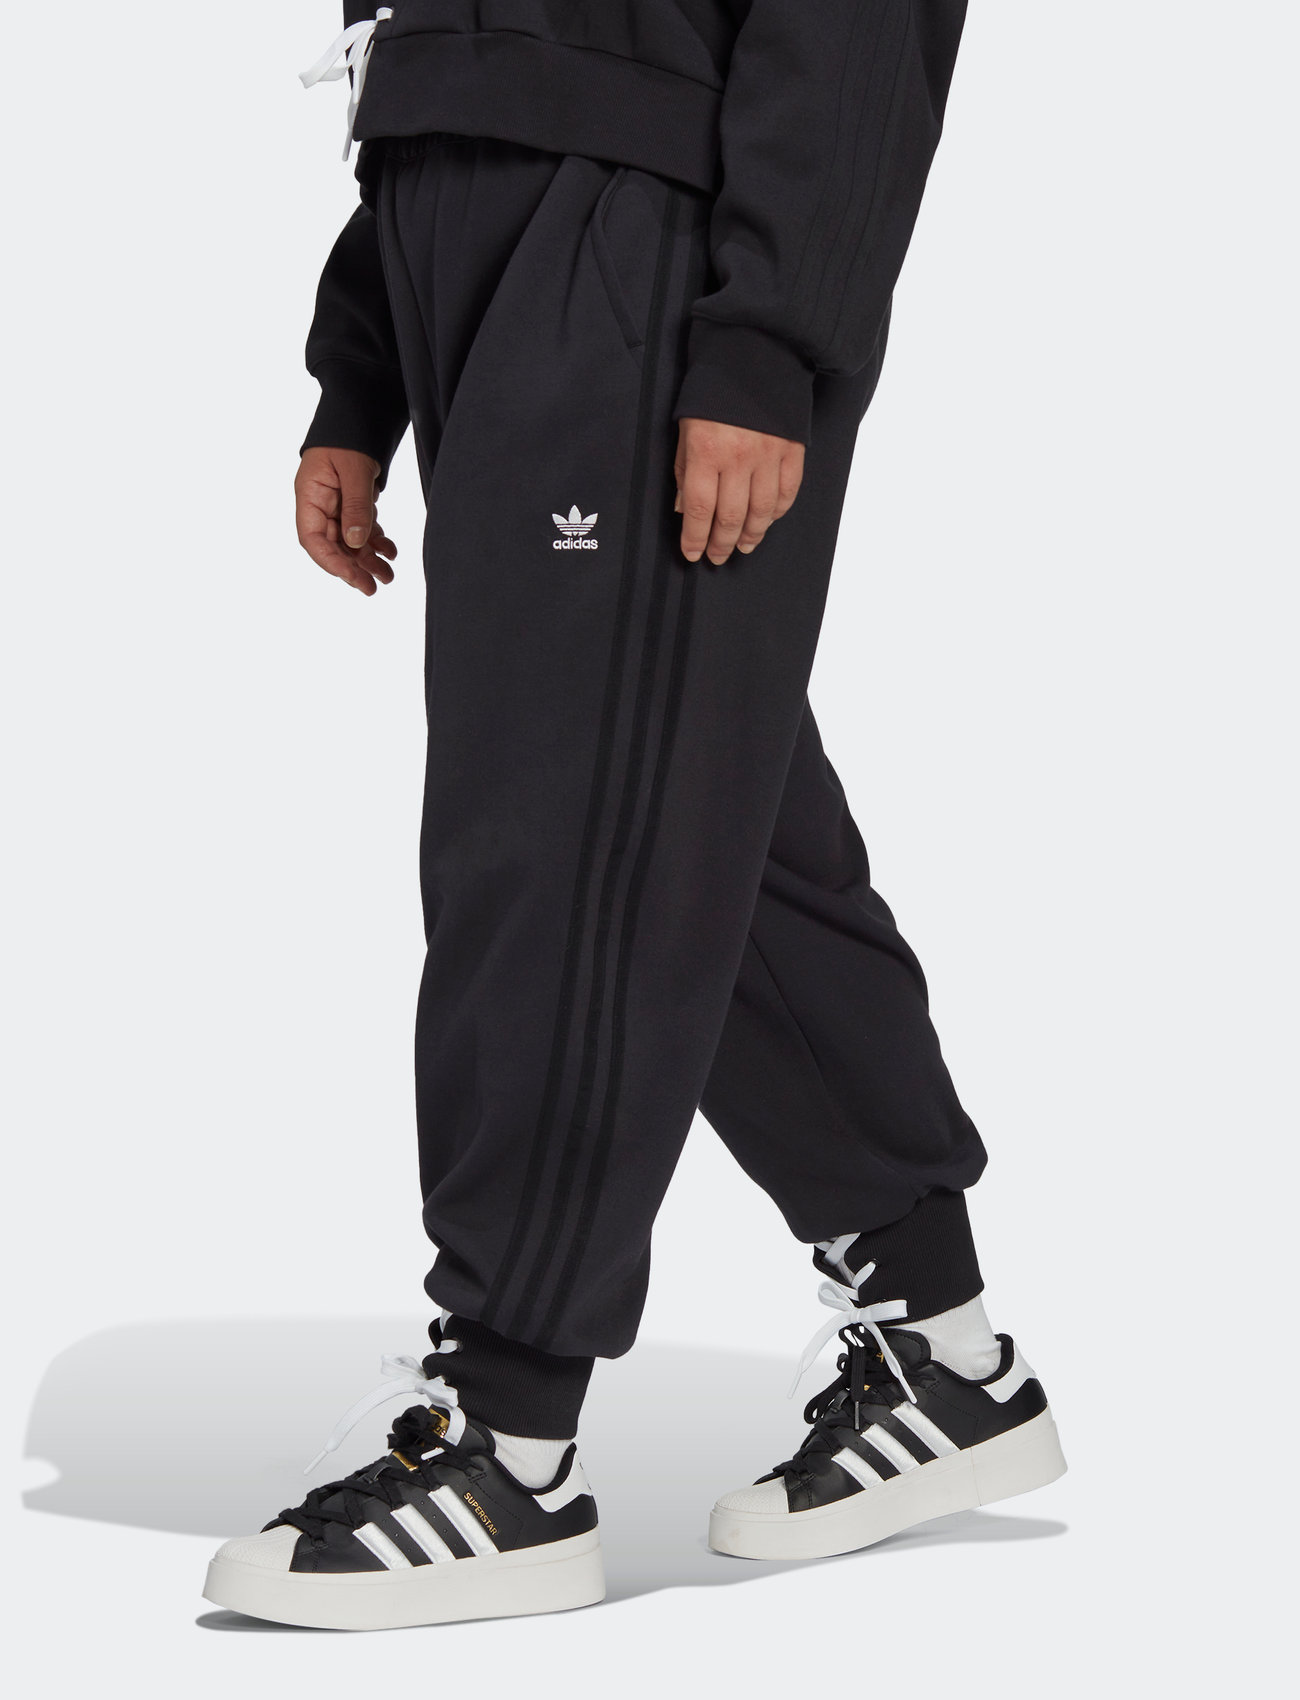 adidas Originals Always Original Laced Cuff Tracksuit Bottoms (plus Size) -  Sweatpants | Tights